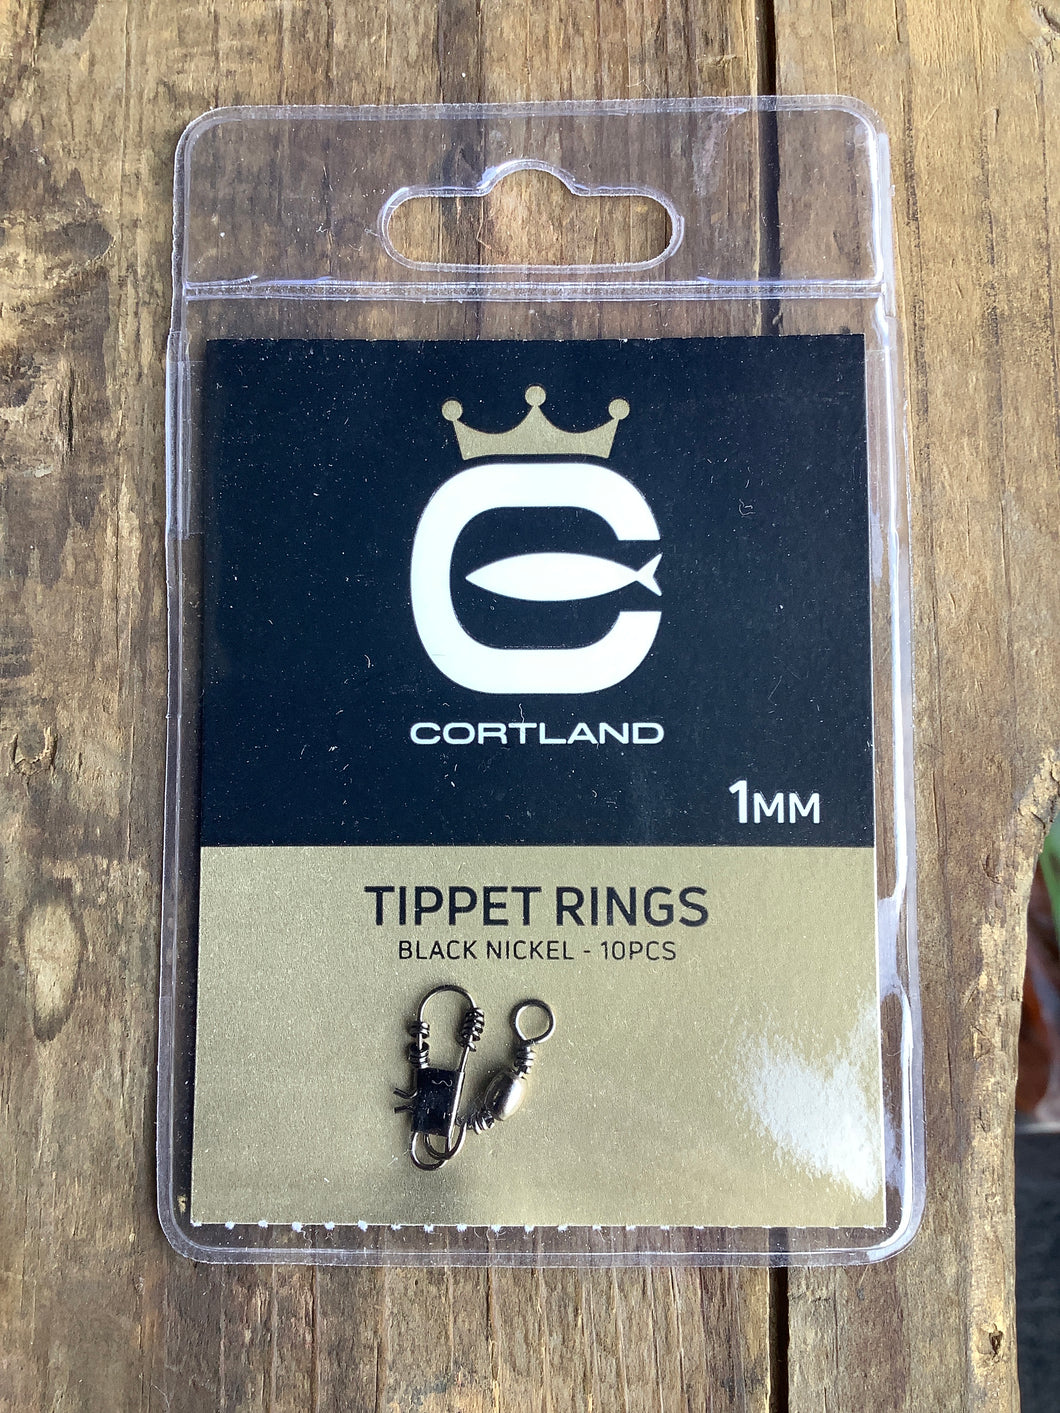 Cortland Tippet Rings